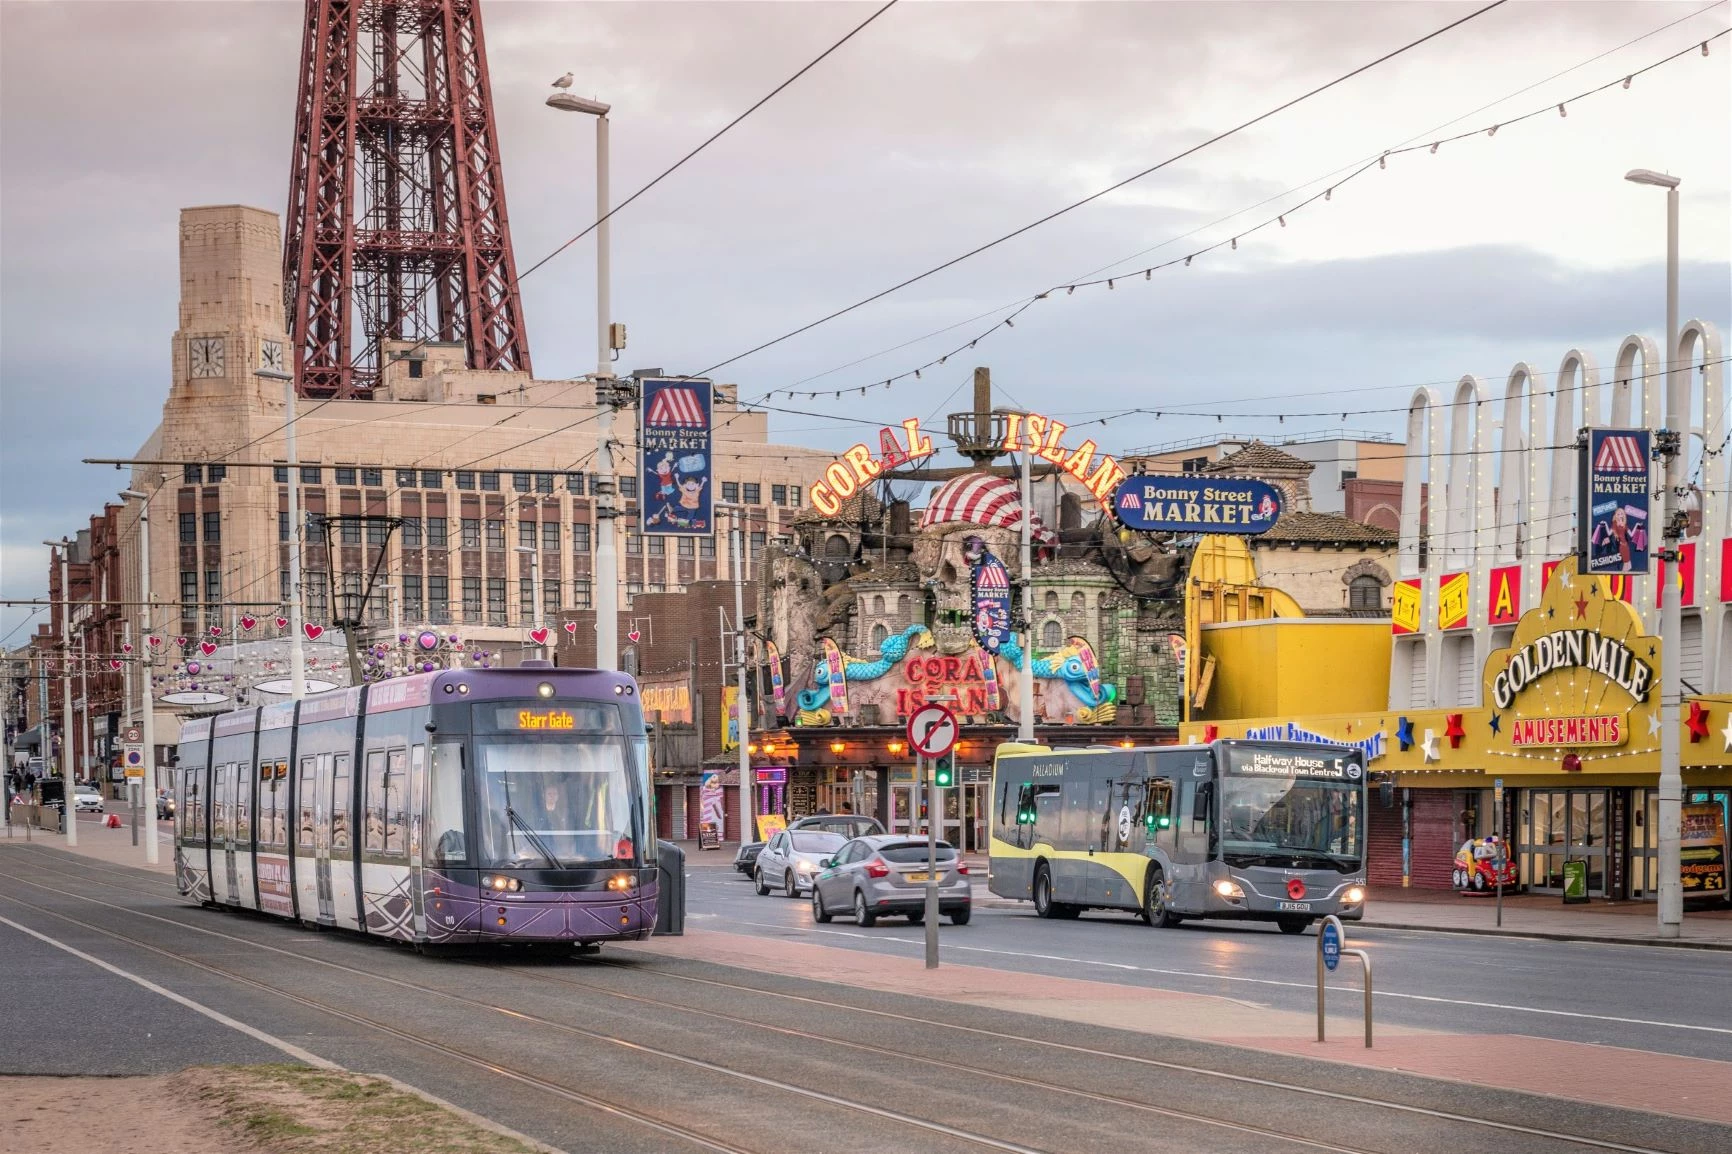 Tram in Blackpool